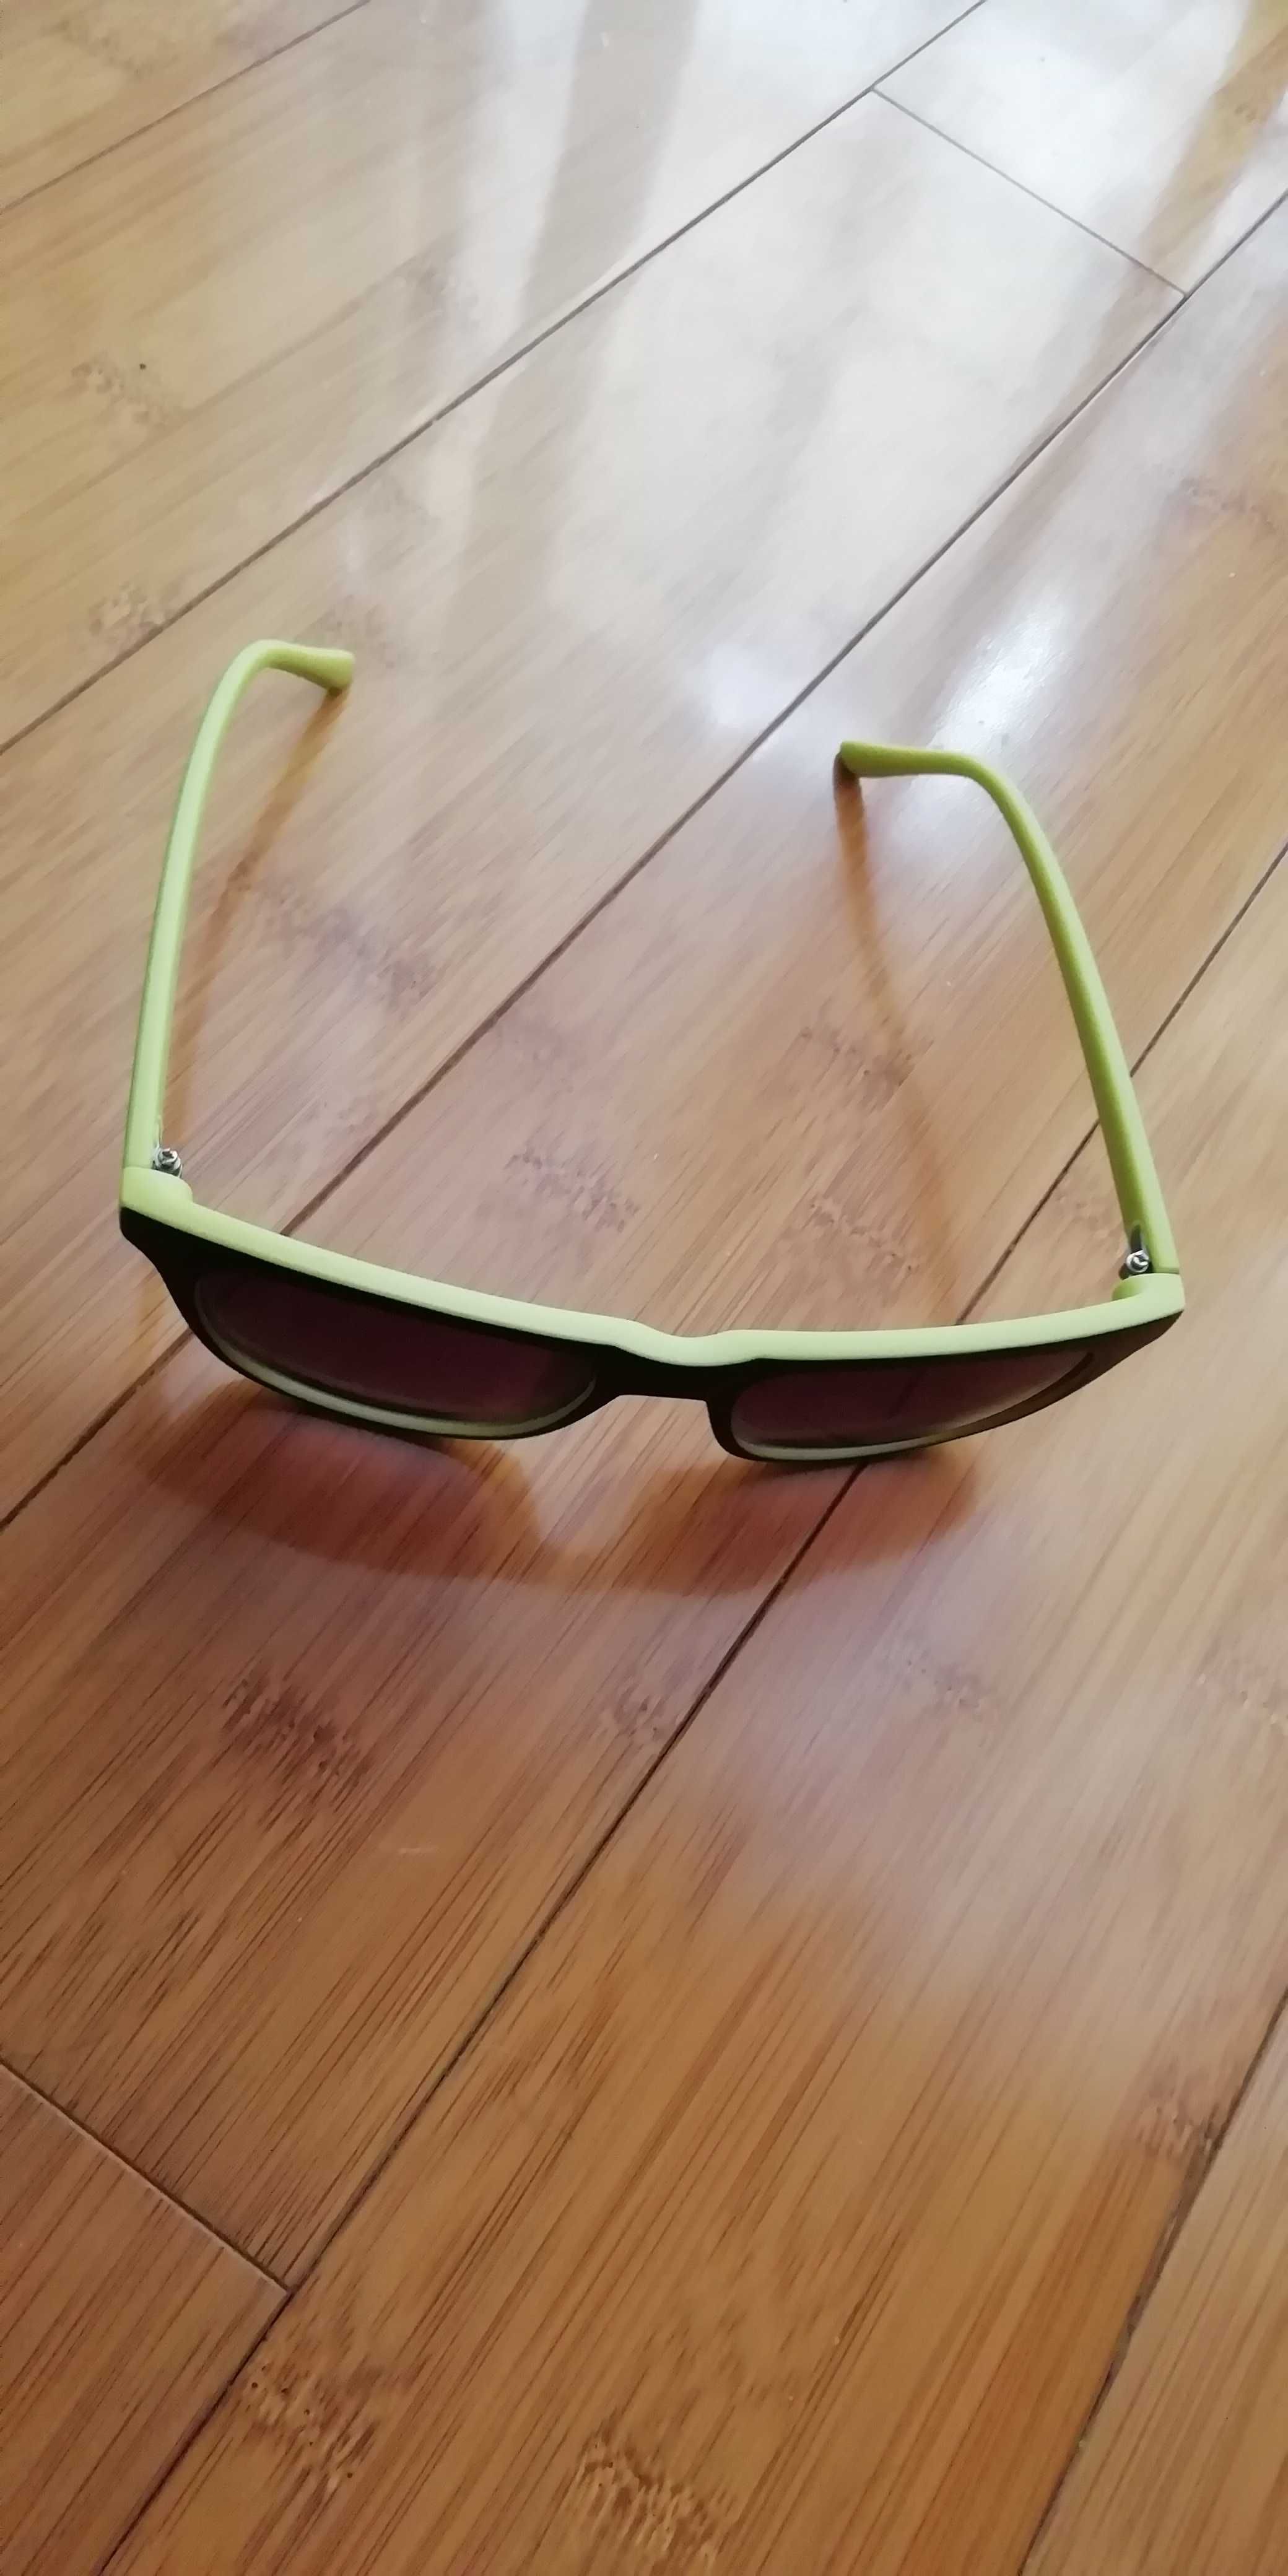 Óculos de Sol - verdes e pretos